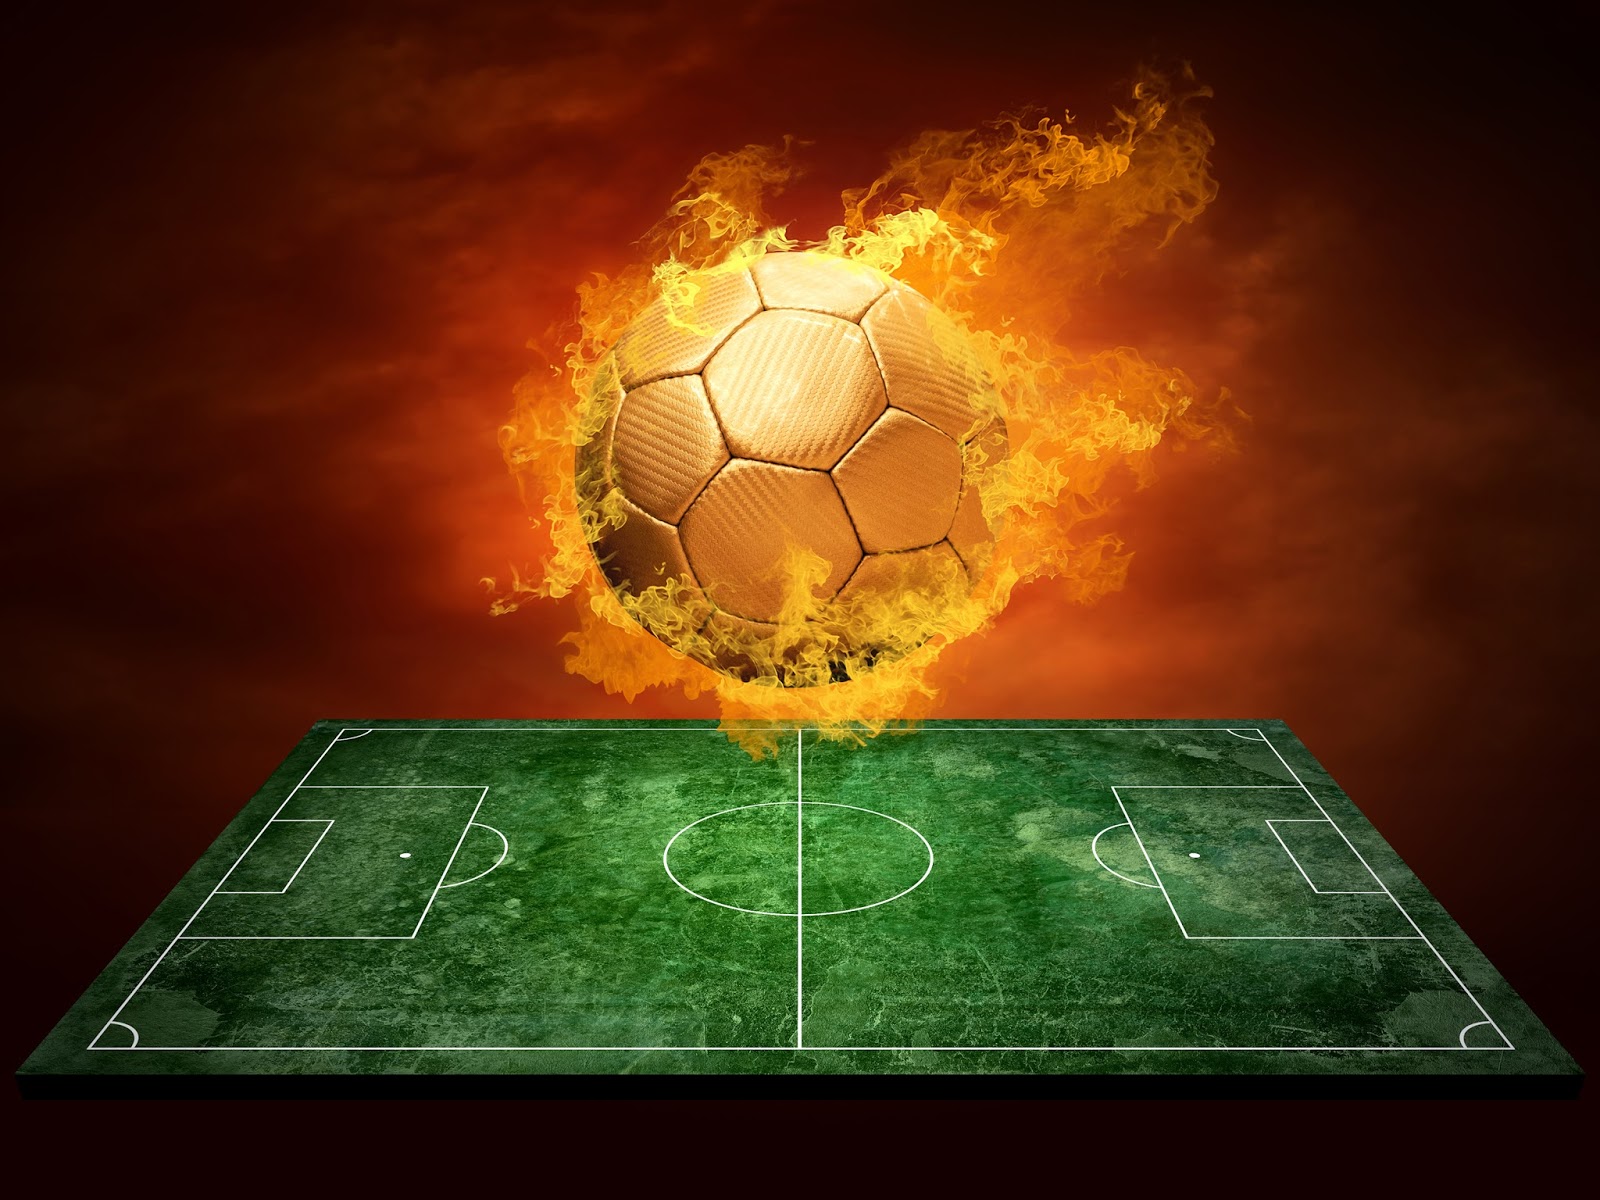 Soccer Field Flame Wallpaper